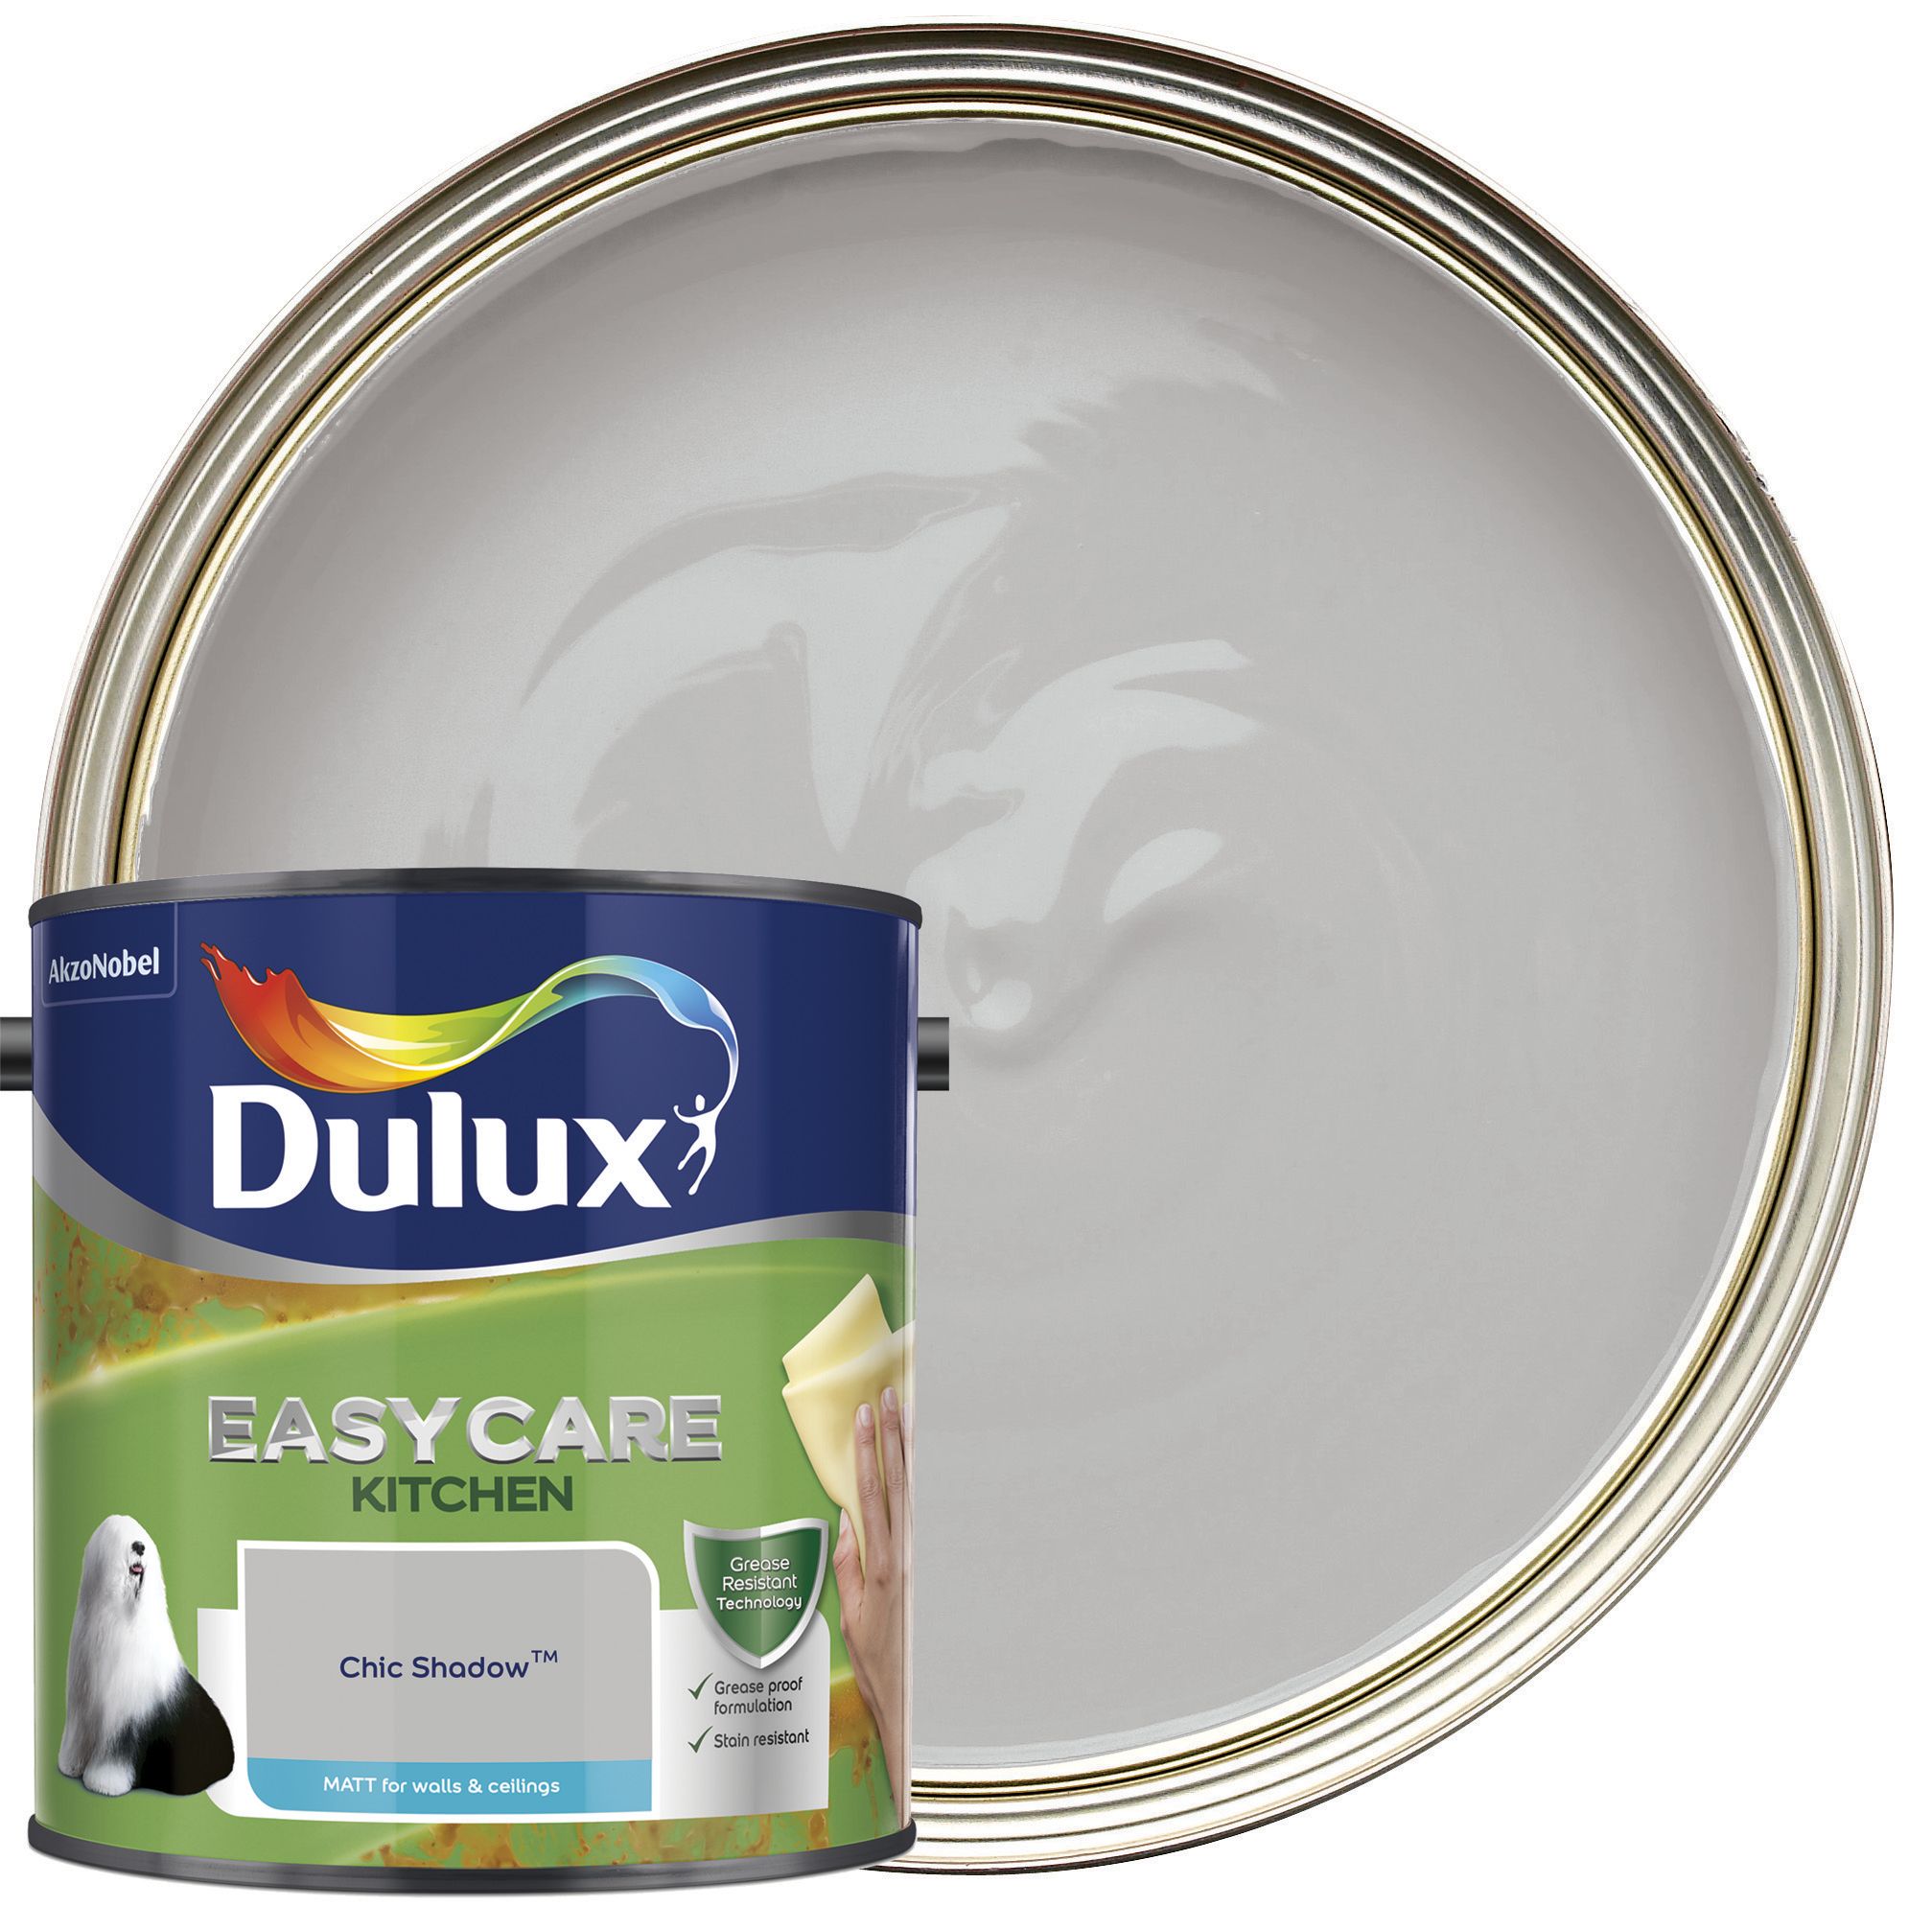 Dulux Easycare Kitchen Matt Emulsion Paint - Chic